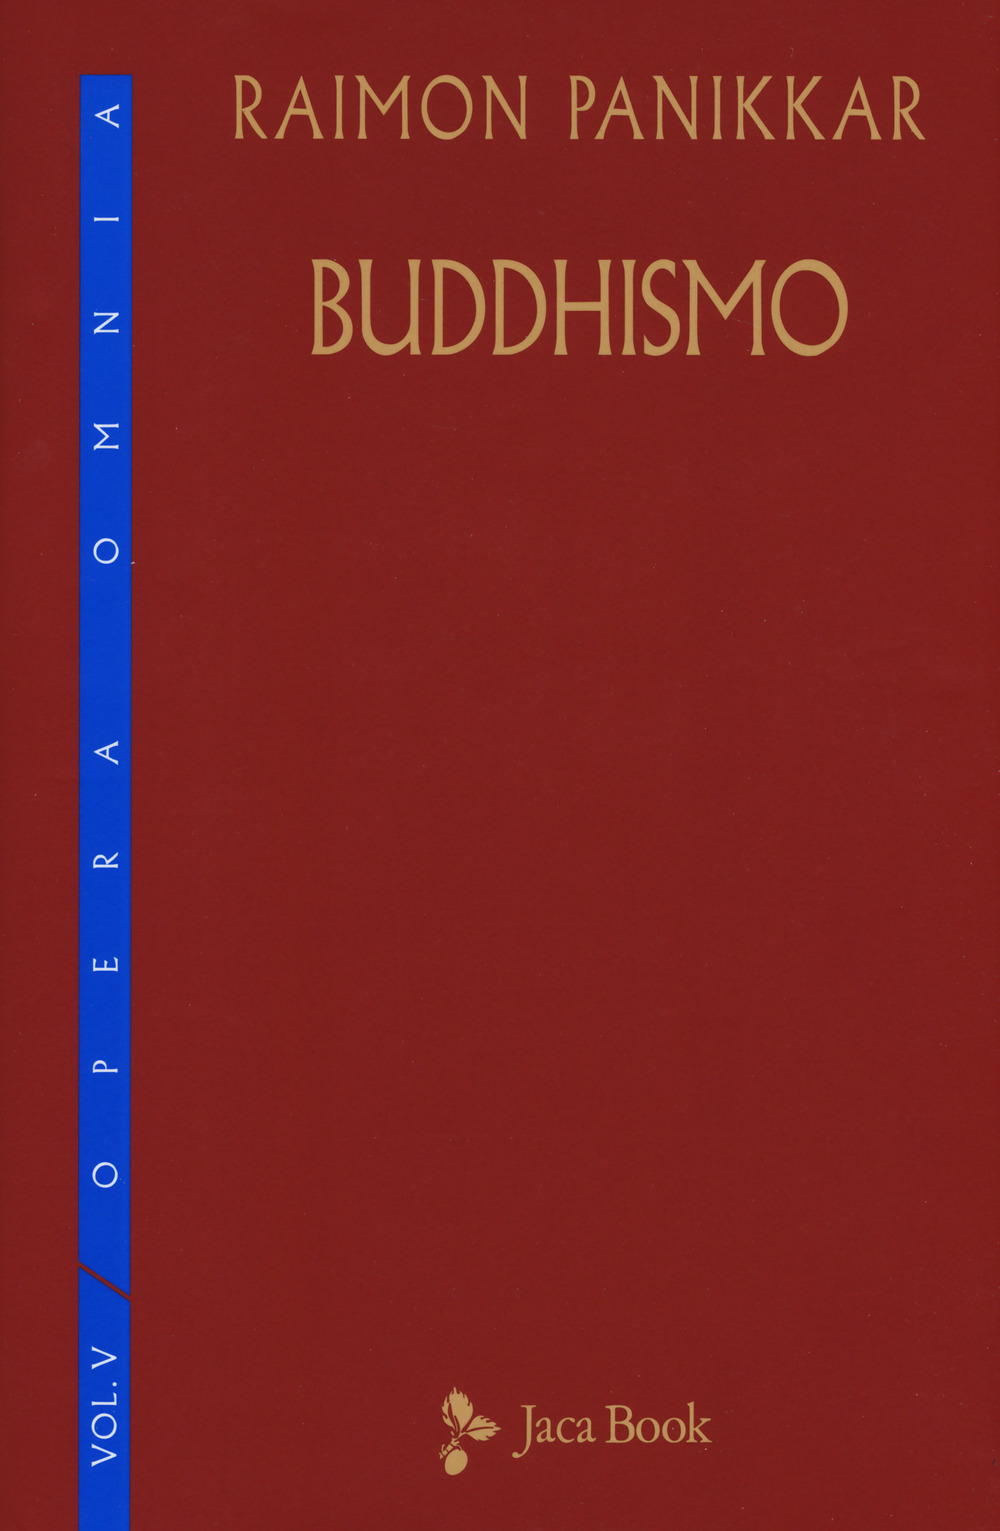 Buddhismo. Vol. 5